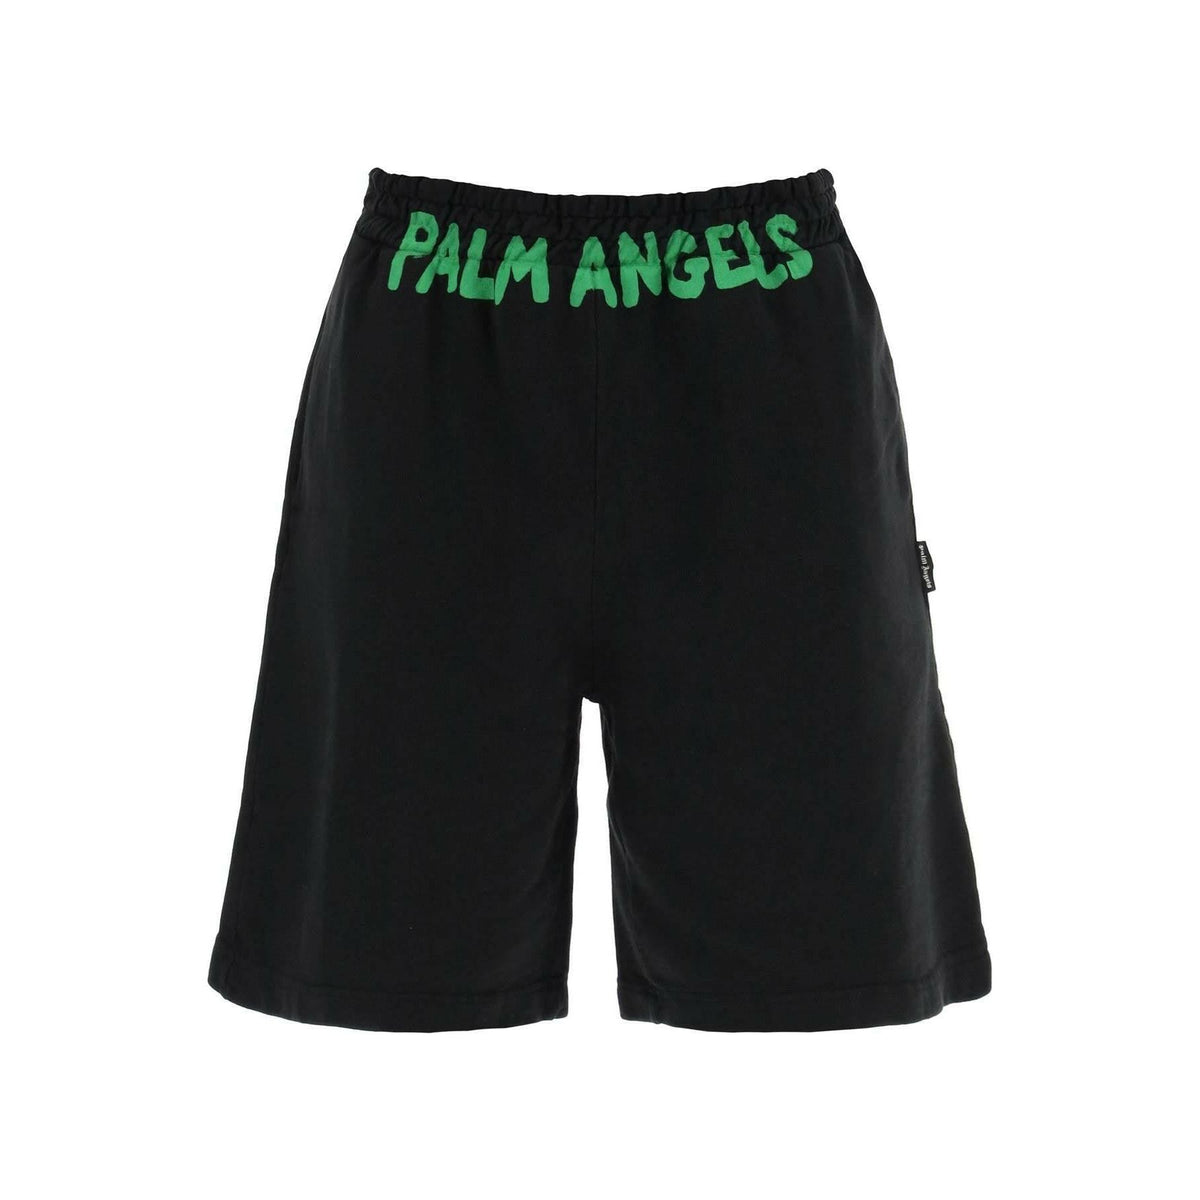 Black and Fluorescent Green Logo Cotton Shorts PALM ANGELS JOHN JULIA.